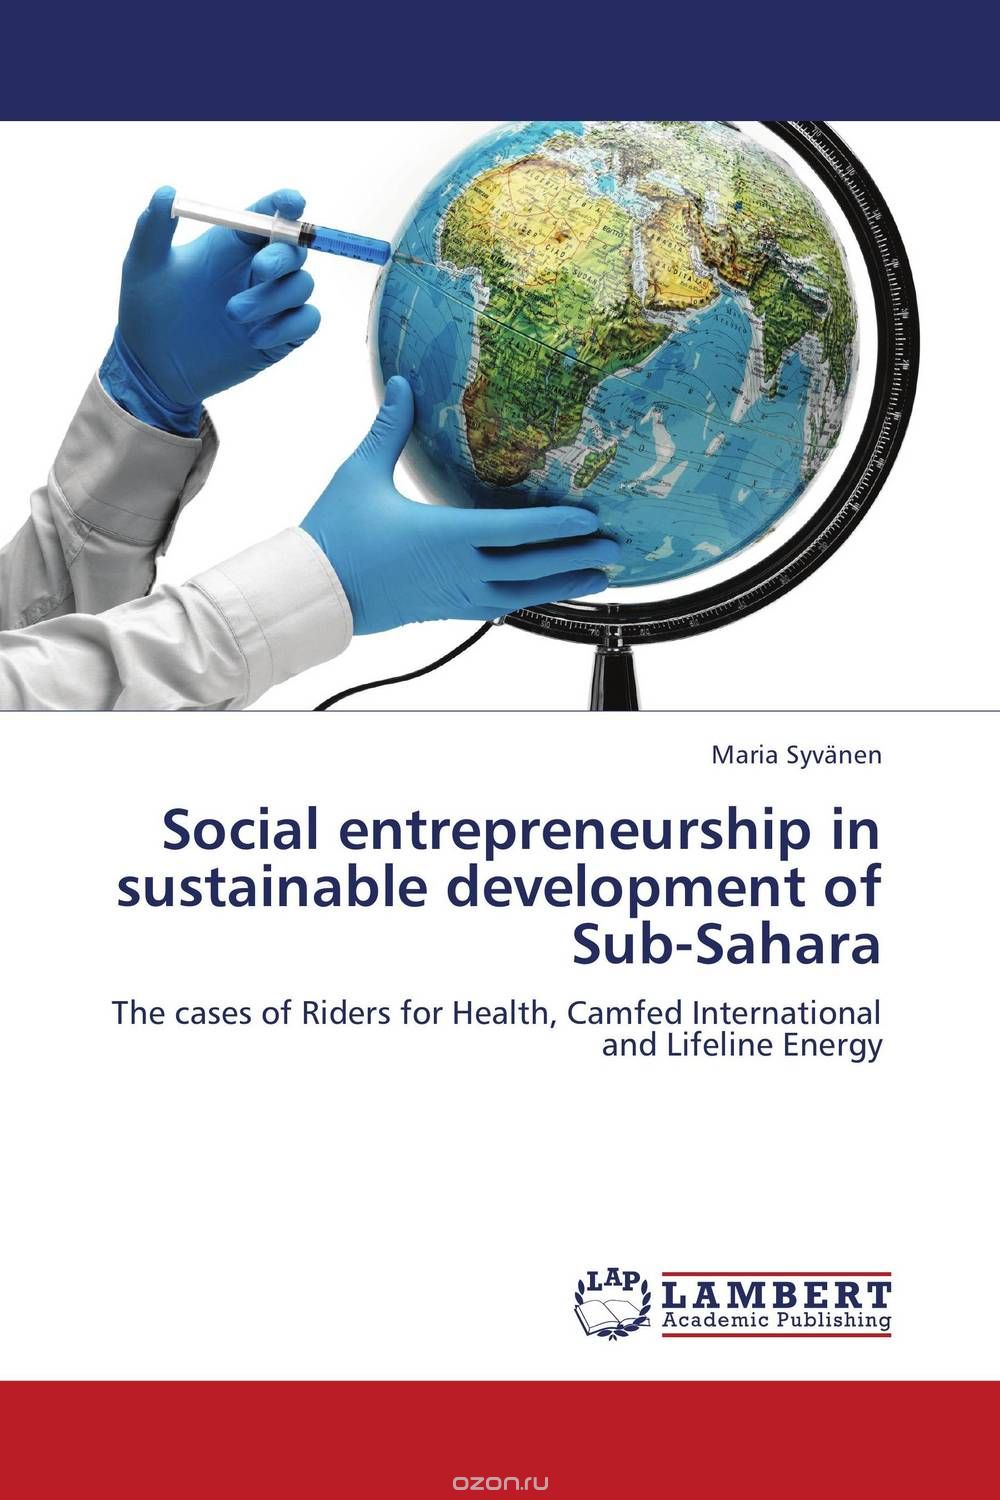 Social entrepreneurship in sustainable development of Sub-Sahara